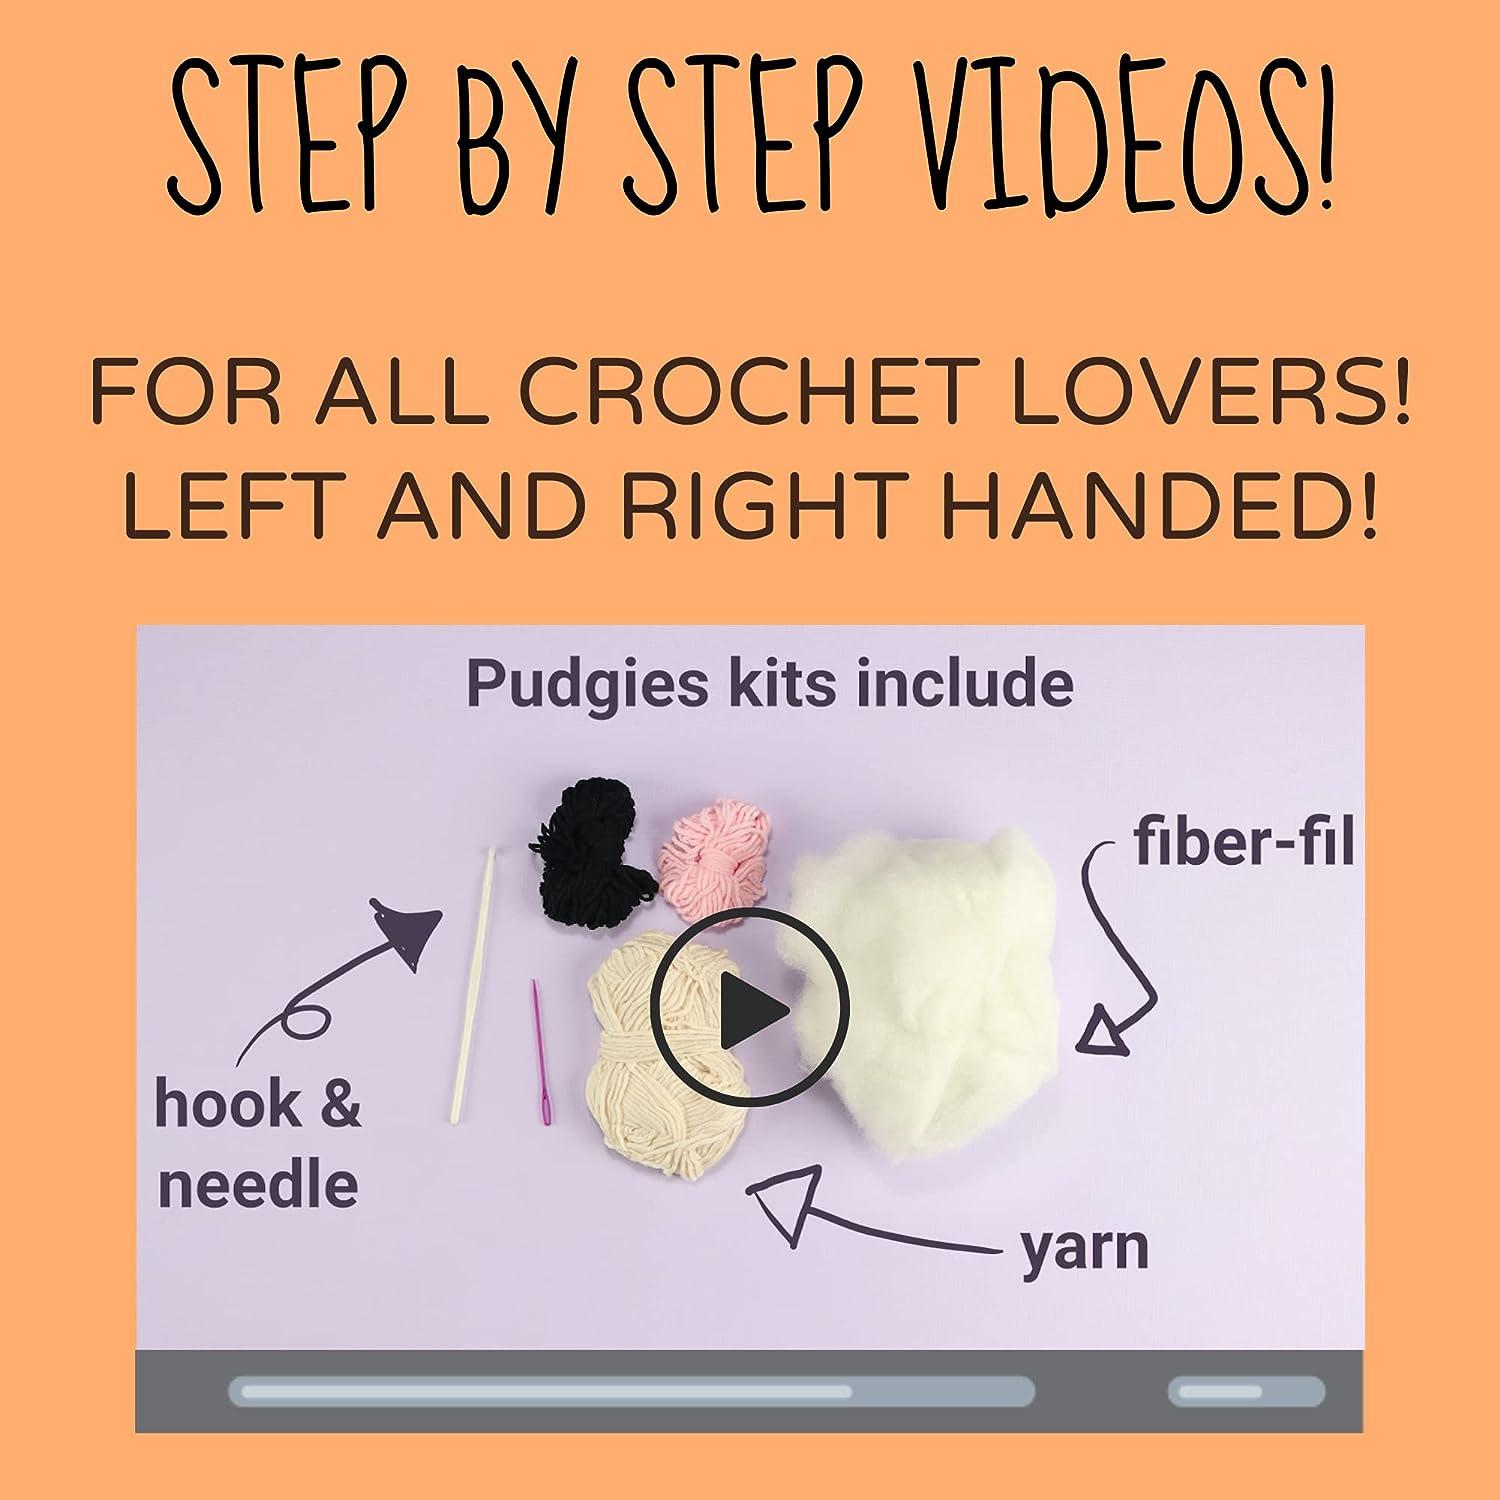 Mini Maker Pudgie Cow Crochet Kit #57015